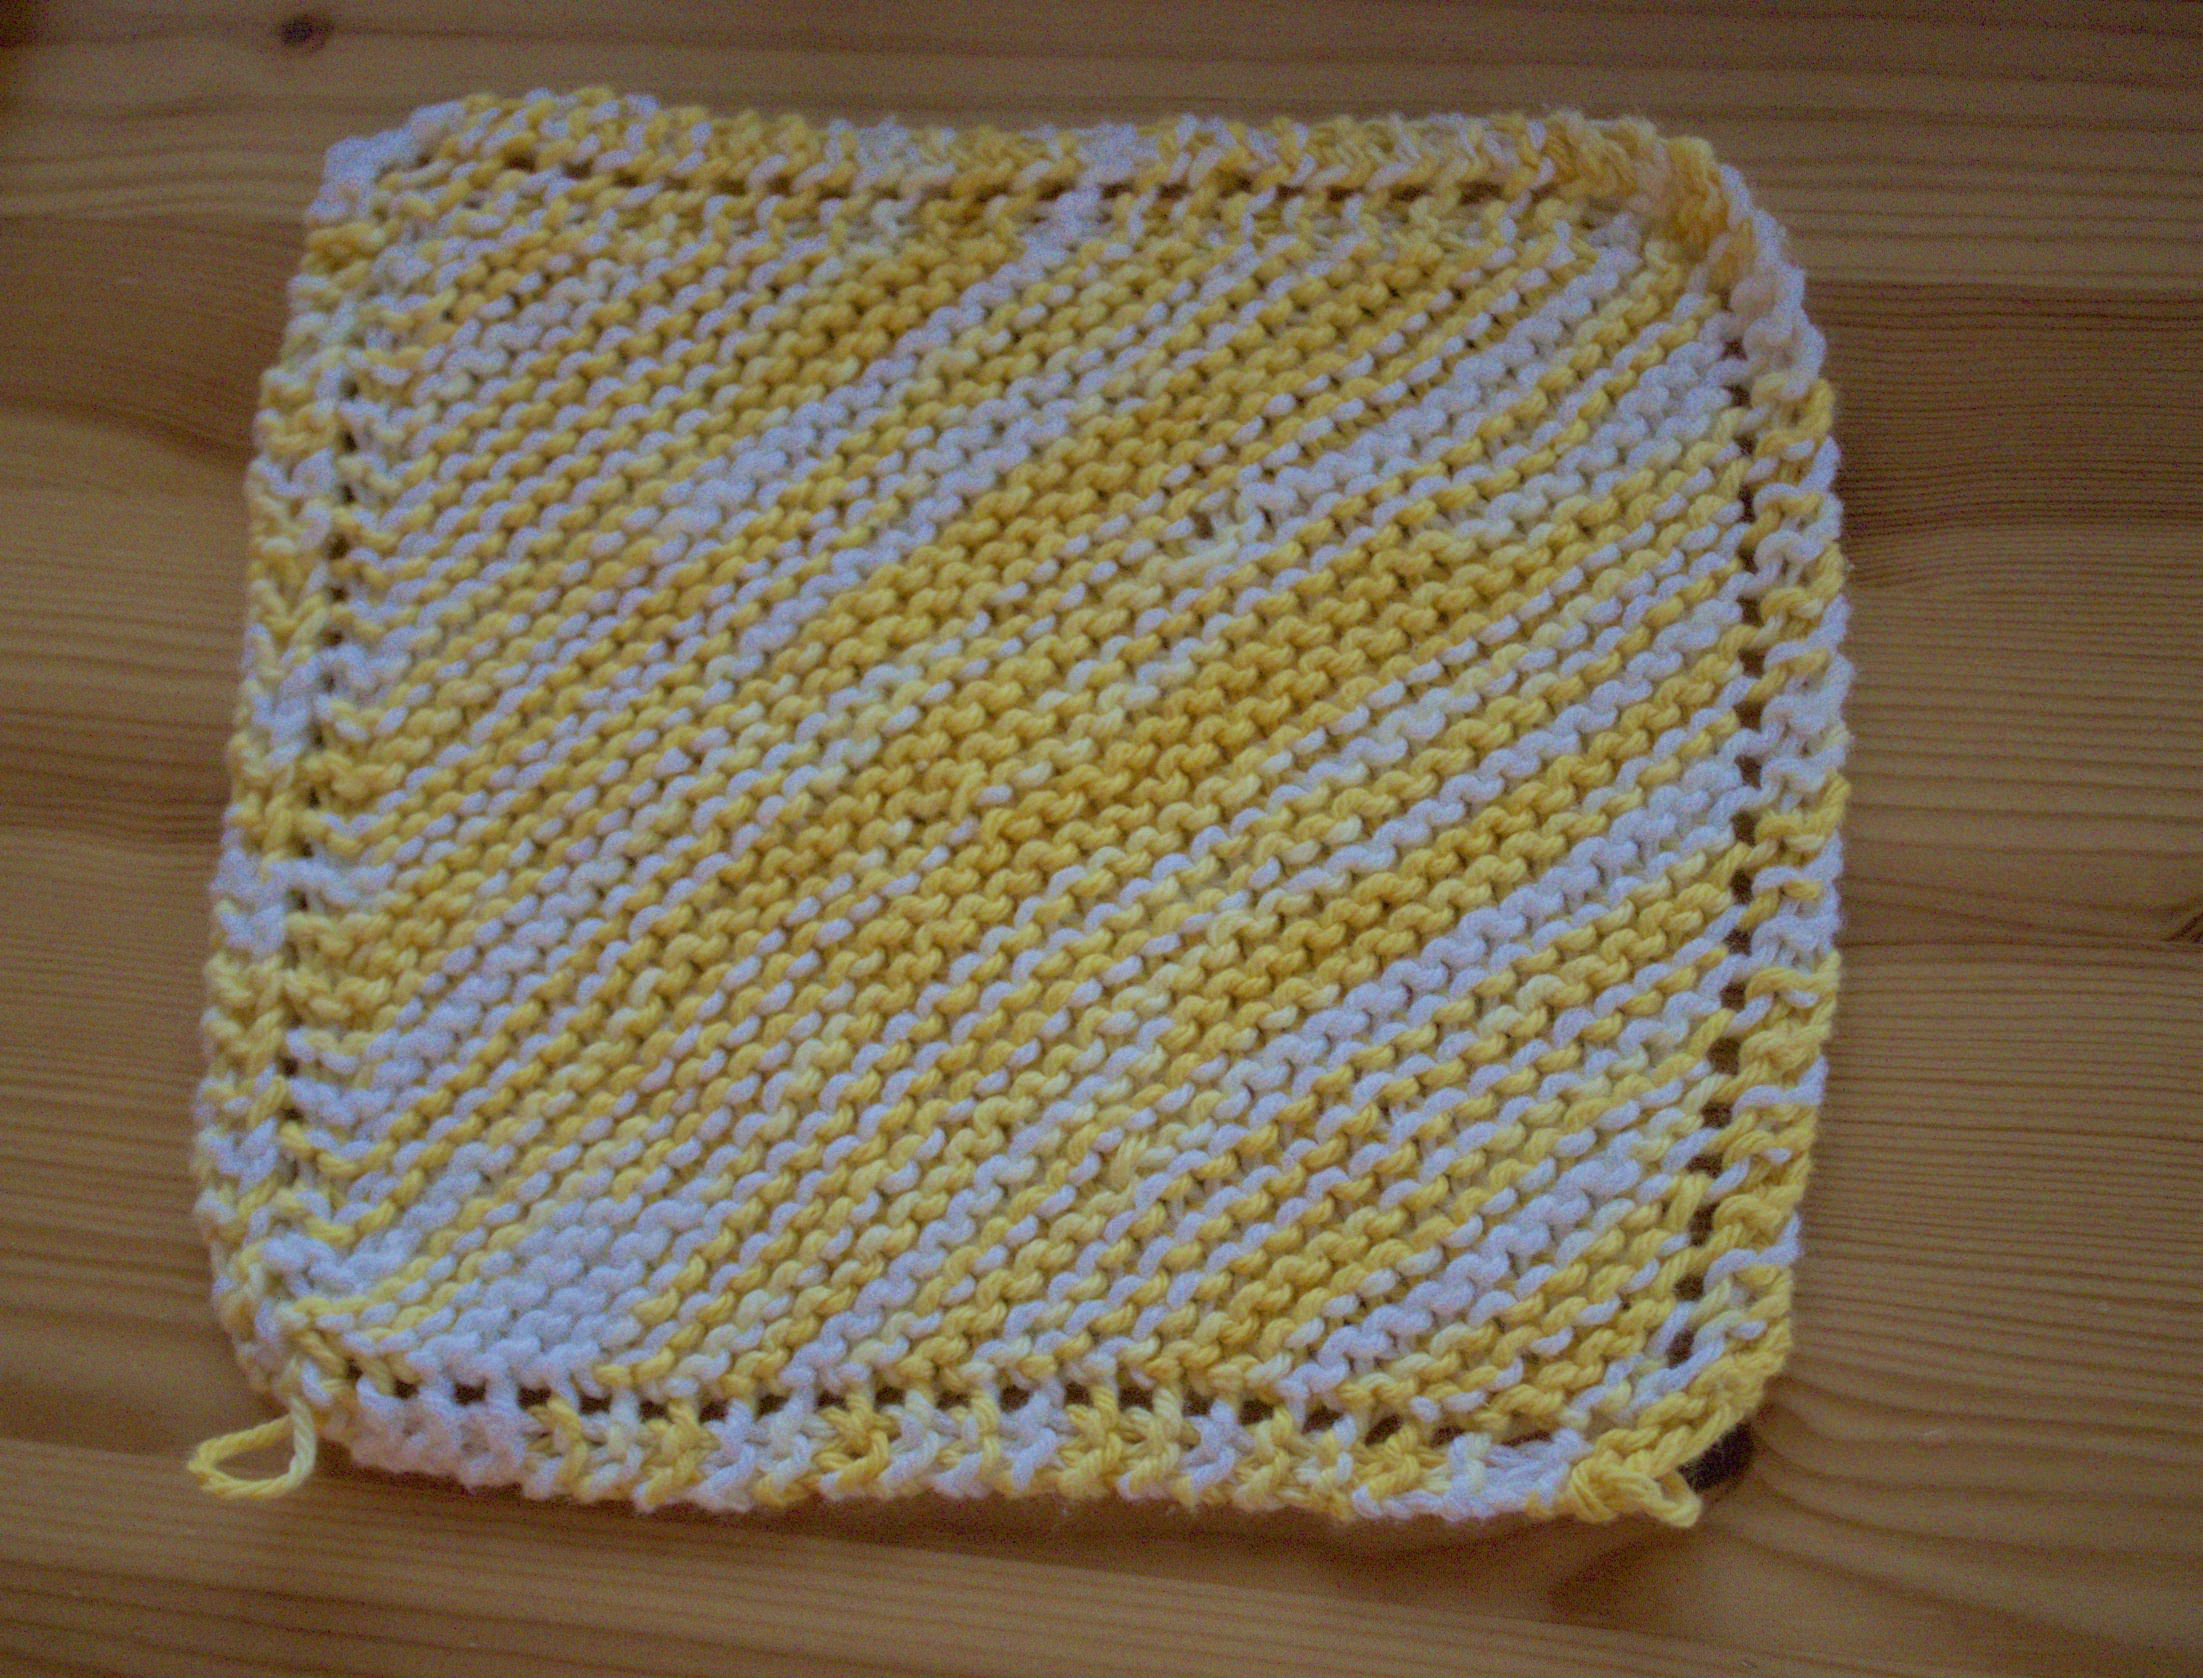 Knit Potholder Patterns Day 146 Bas First Knit Project Or How To Knit A Potholder